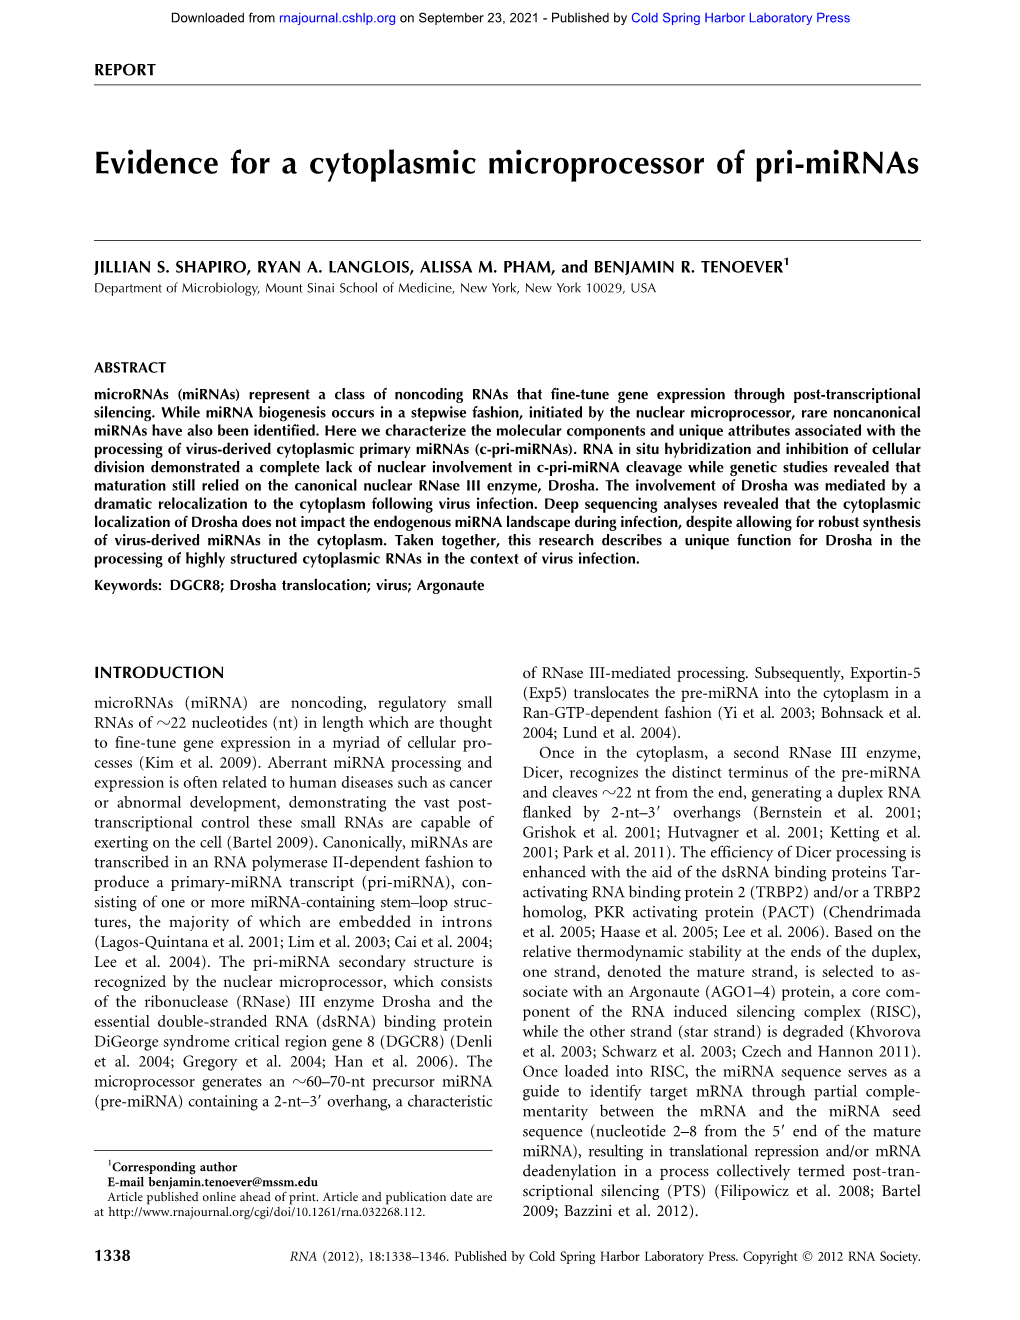 Evidence for a Cytoplasmic Microprocessor of Pri-Mirnas